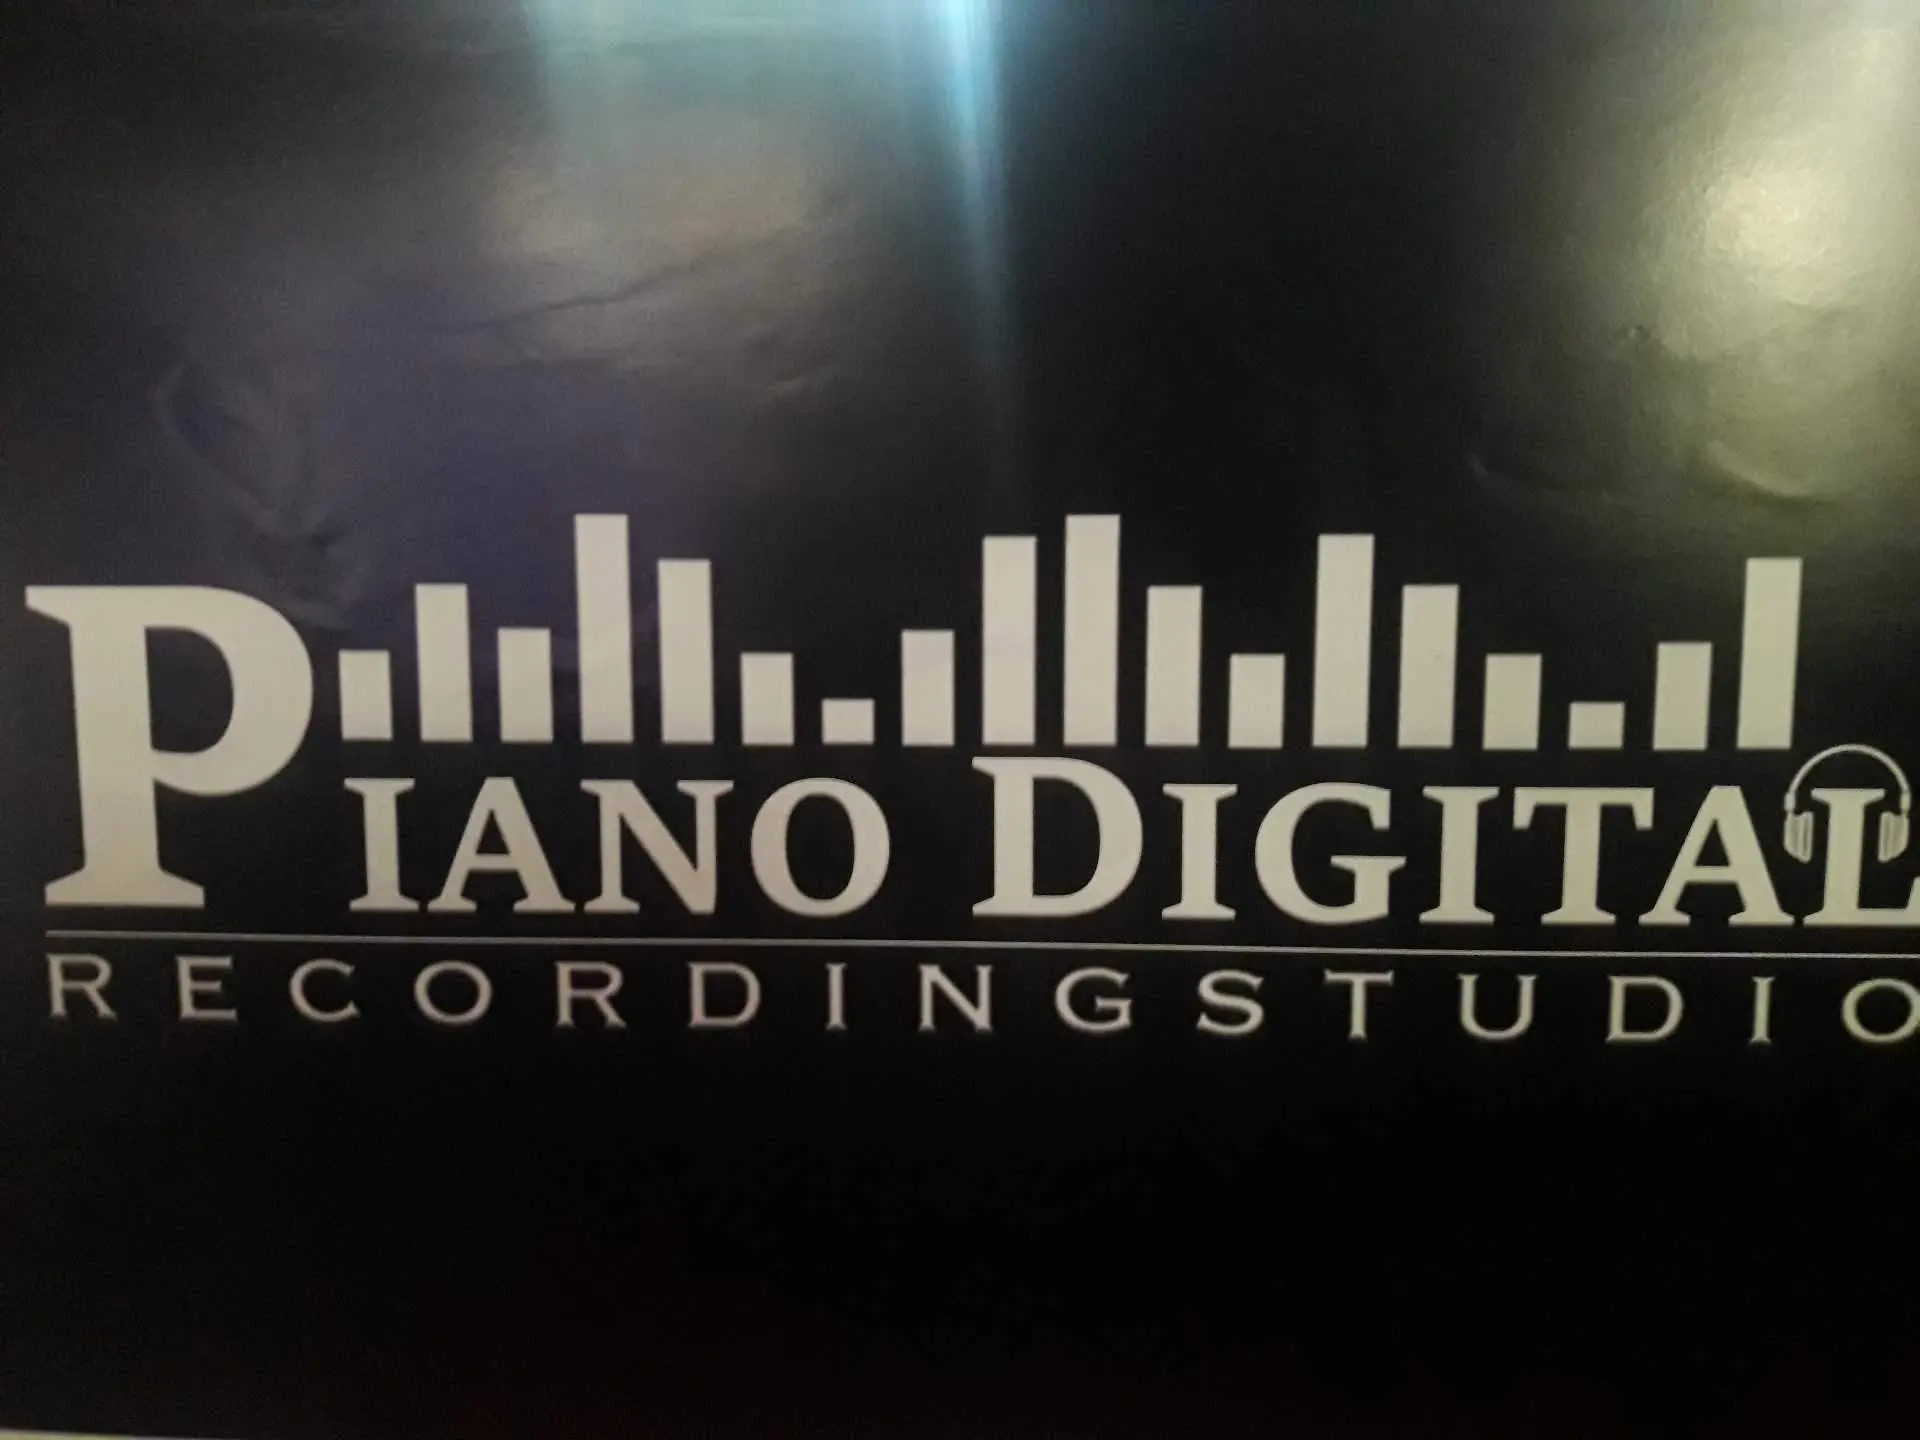 Piano Digital Recording Studio